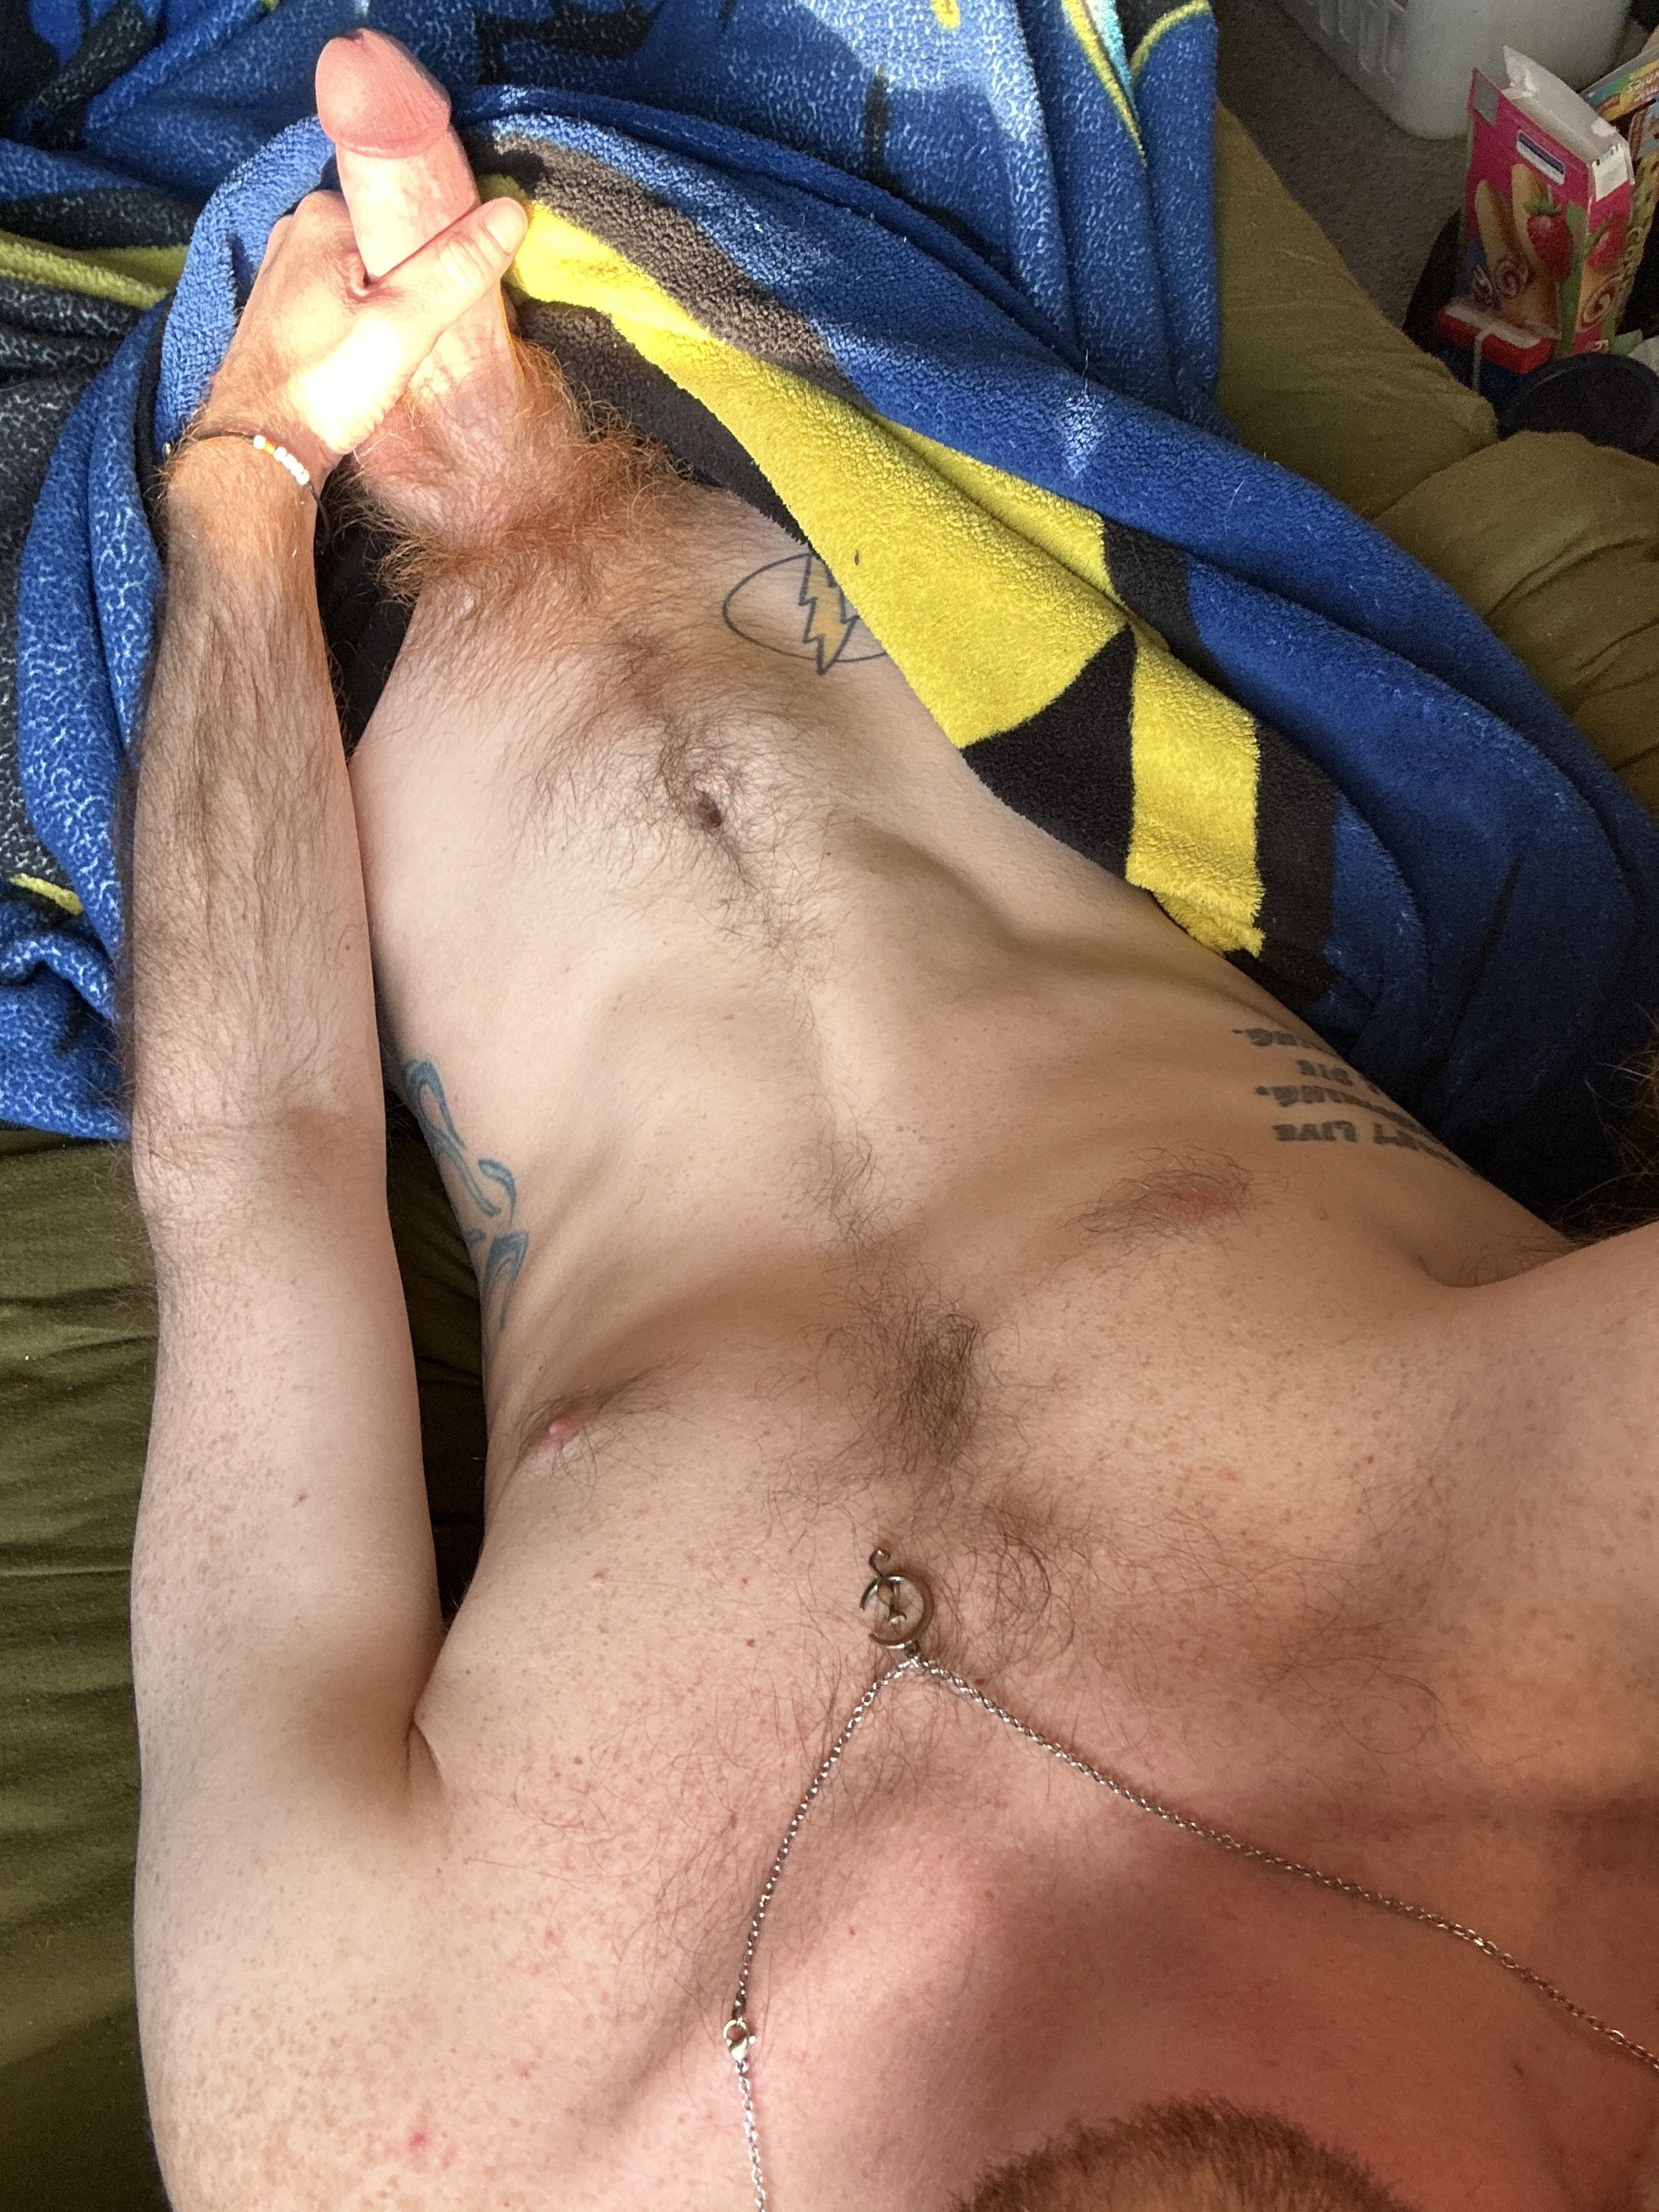 27 m usa. Waking up. Anybody have any sex videos to share? Dakotatye95 |  Scrolller